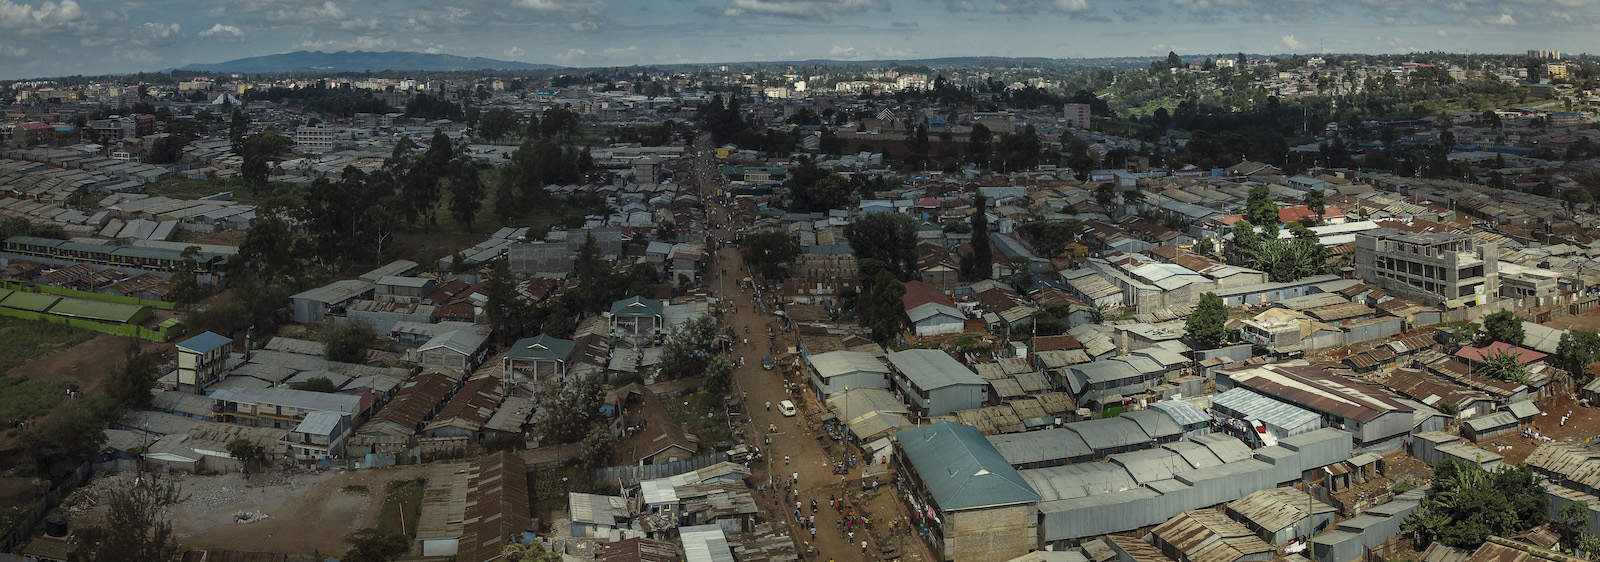 An overhead view of Kibera, a slum in Nairobi, Kenya